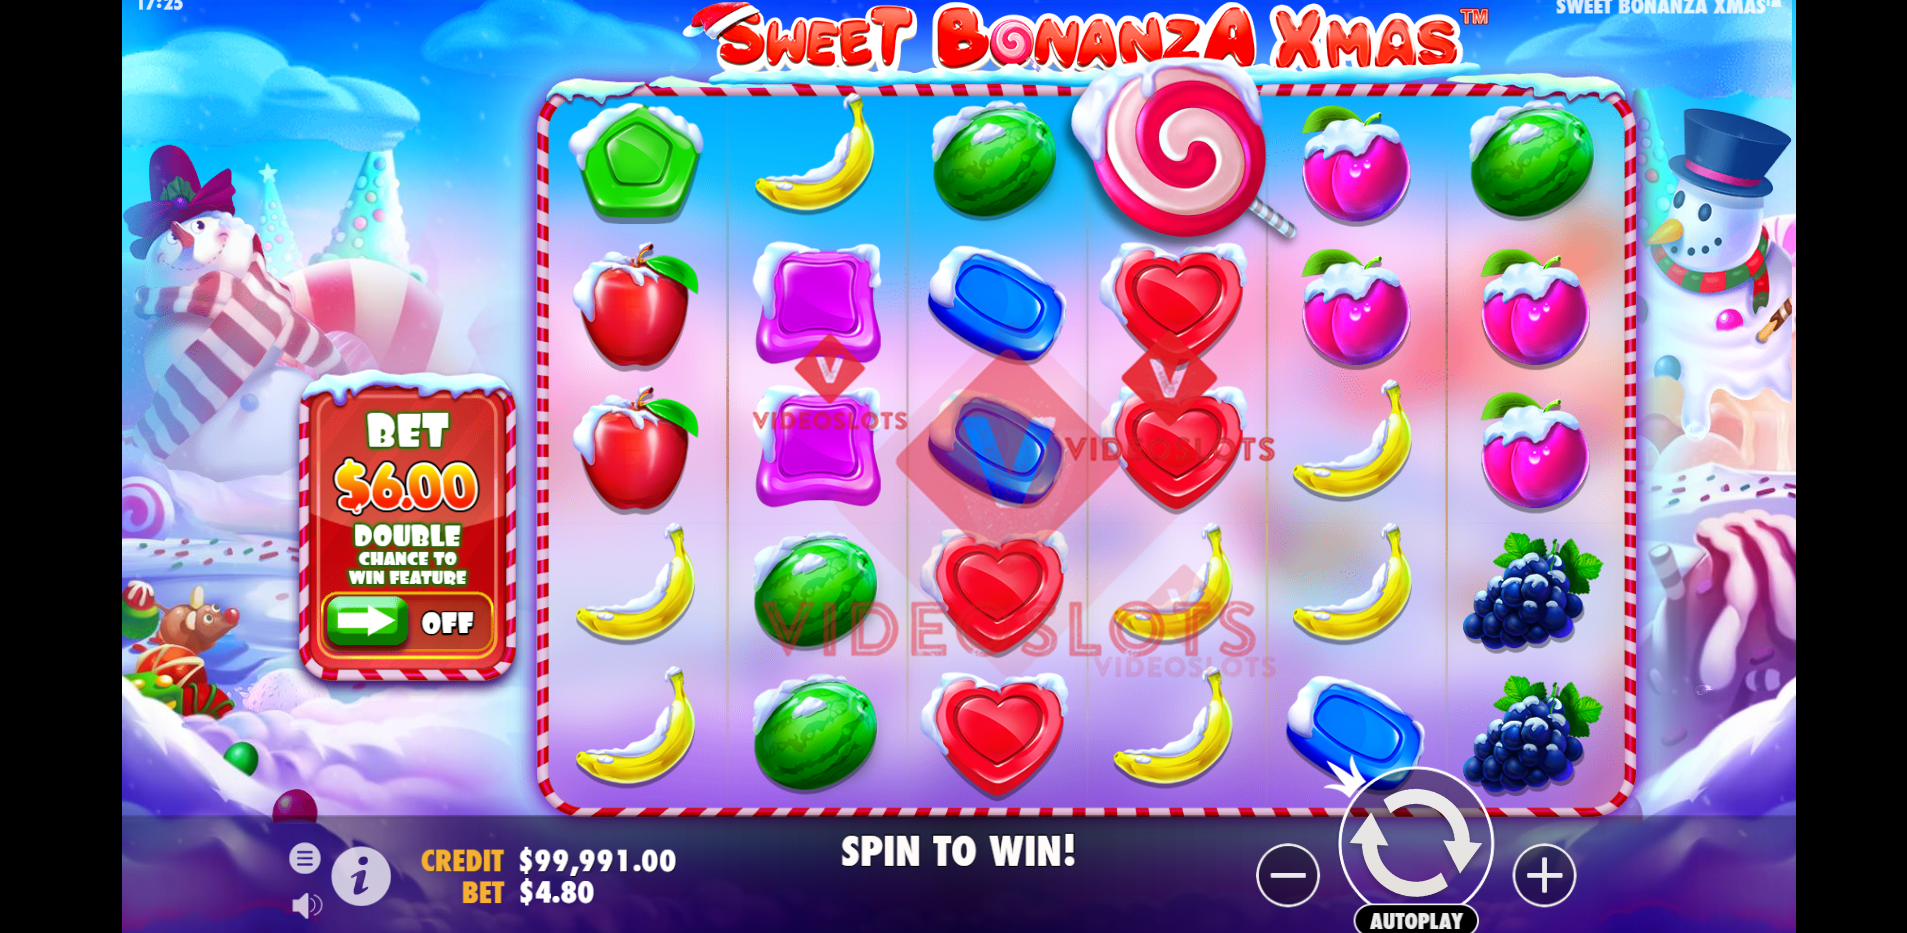 Base Game for Sweet Bonanza Xmas slot by Pragmatic Play